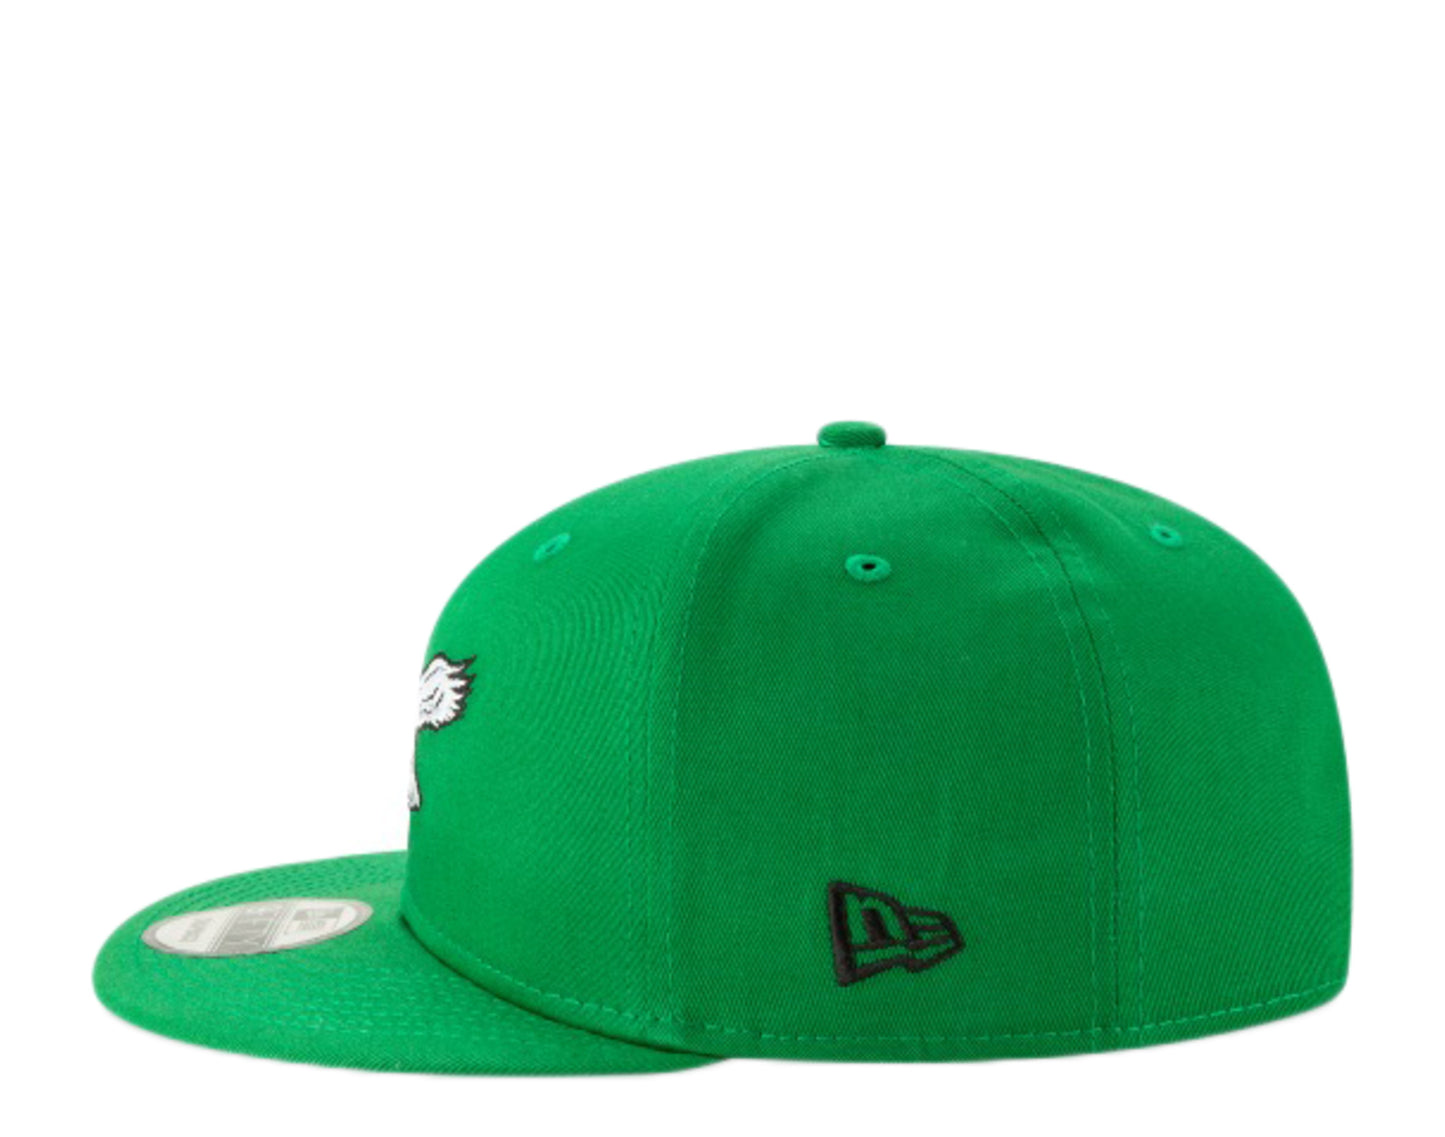 New Era 9Fifty NFL Philadelphia Eagles Basic Green/White Snapback Hat 11883677